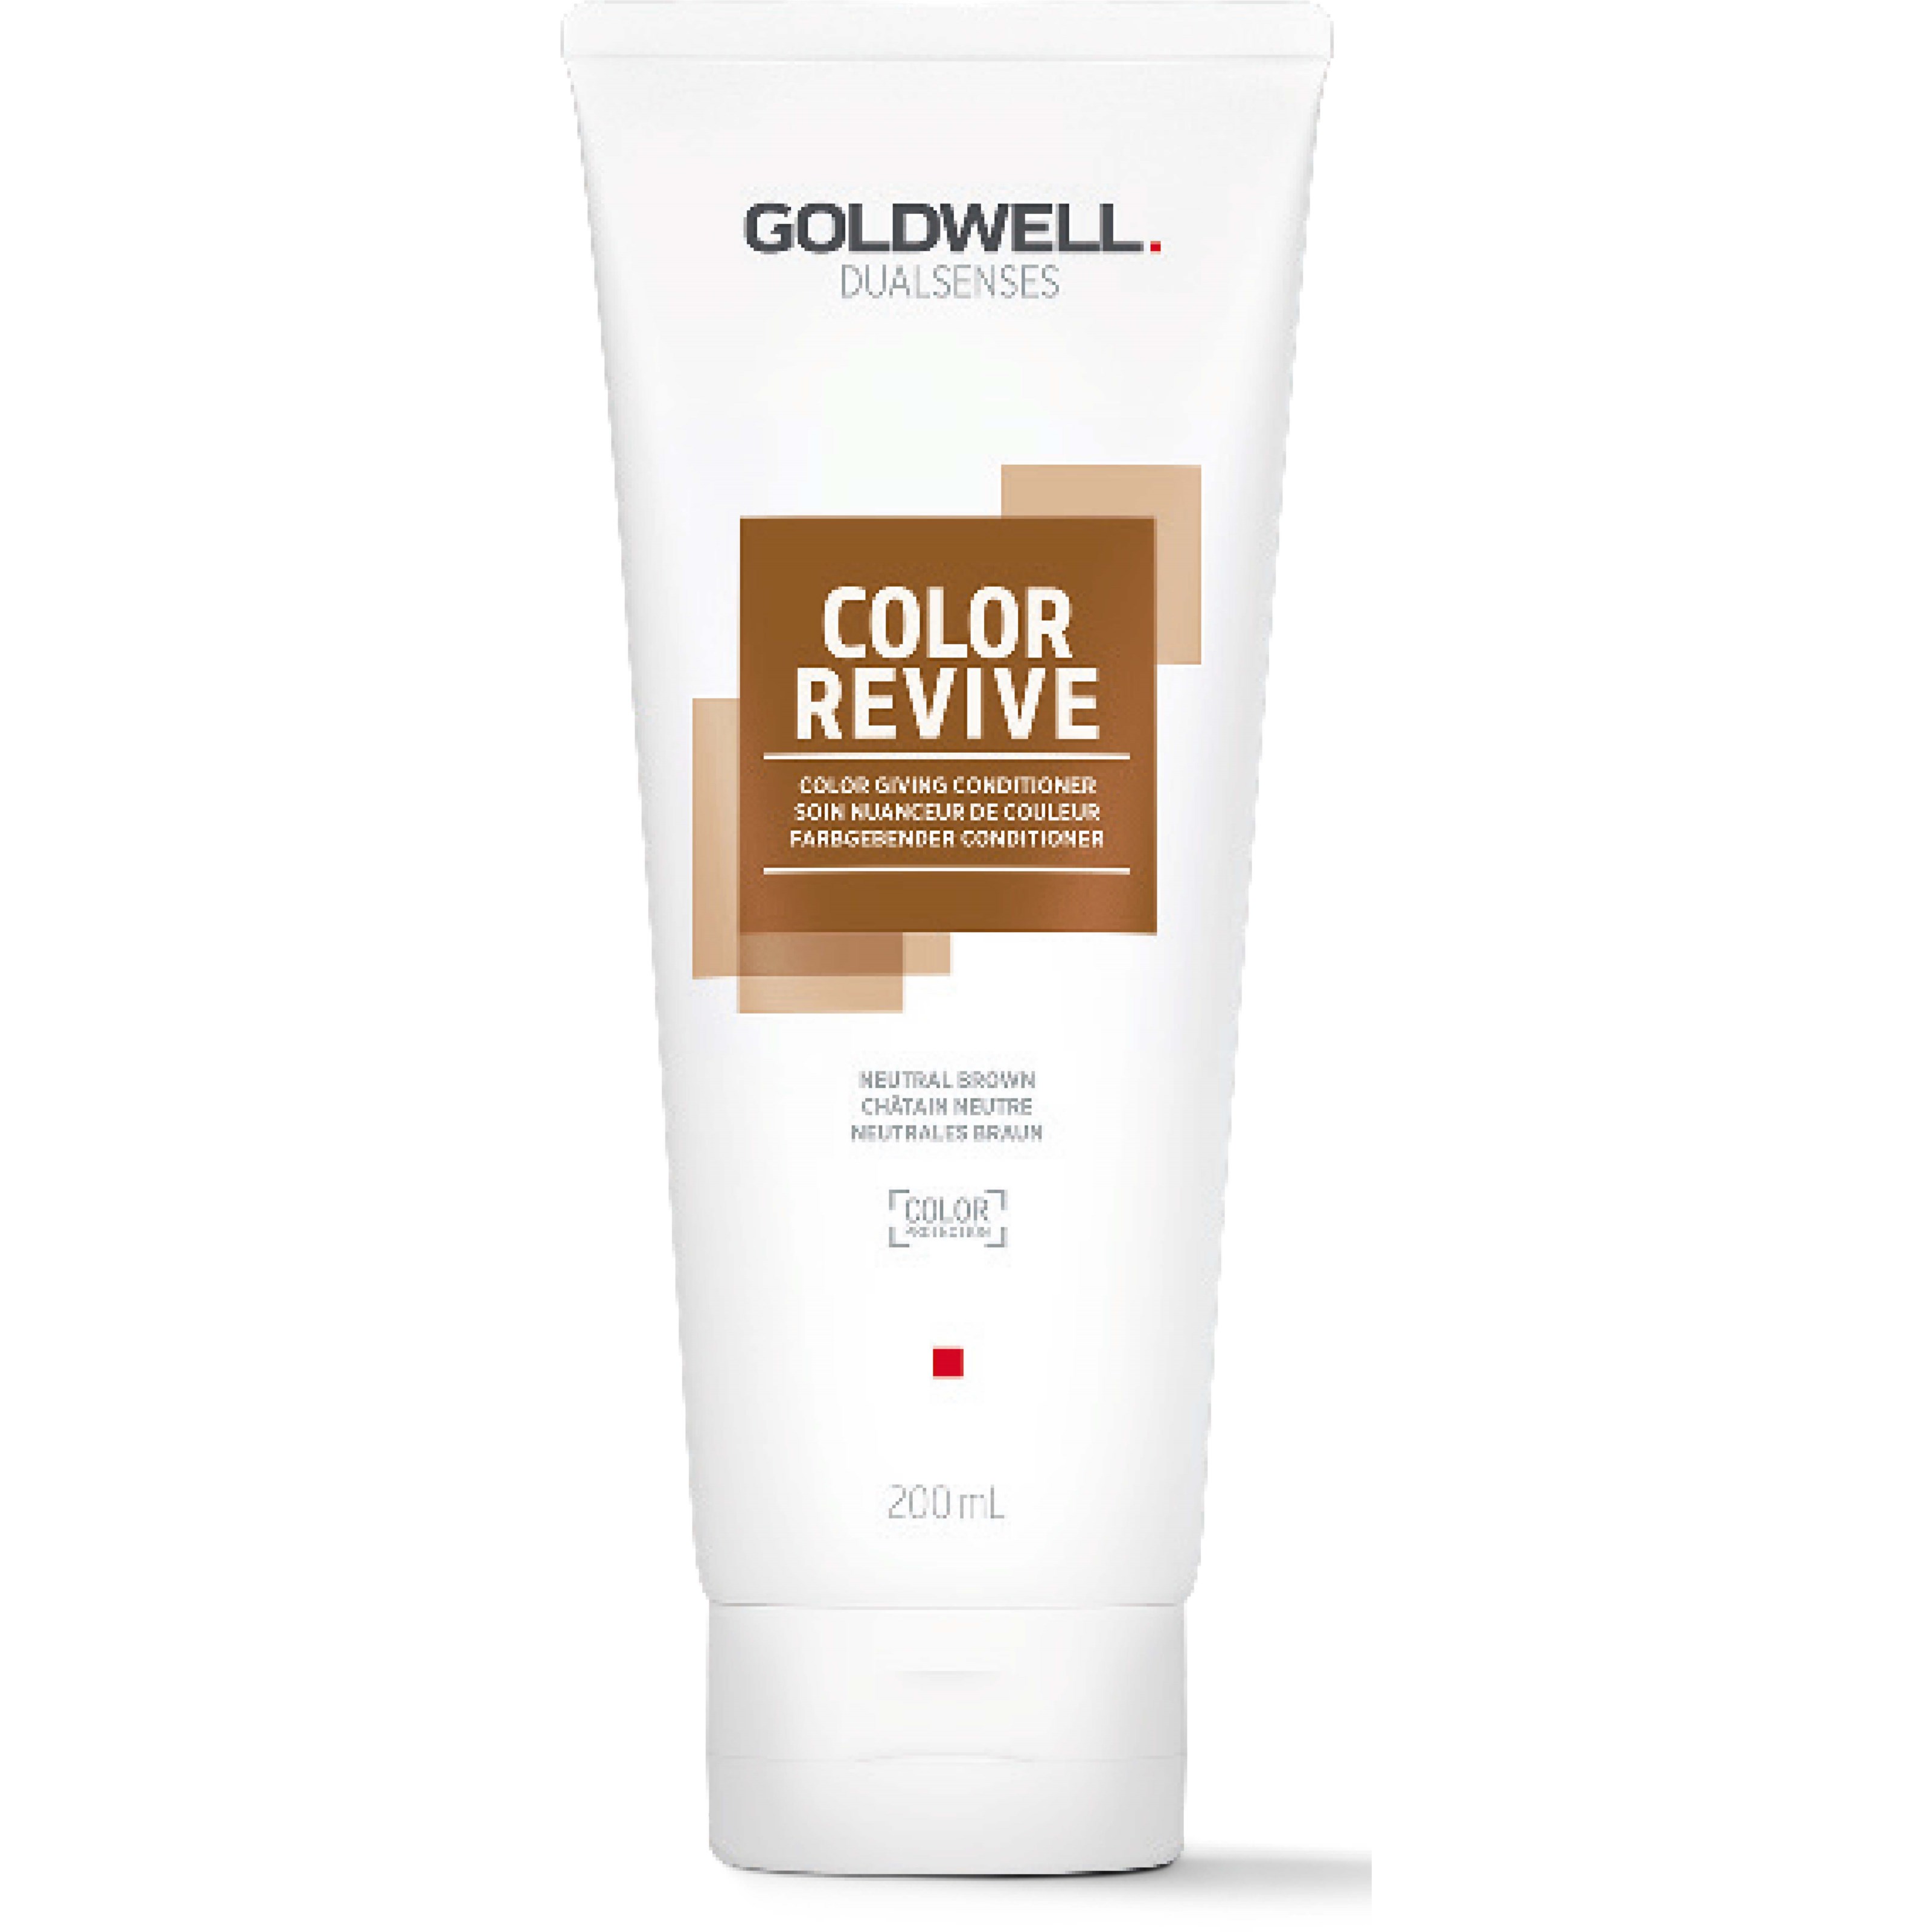 Bilde av Goldwell Dualsenses Color Revive Color Giving Conditioner Neutral Brow